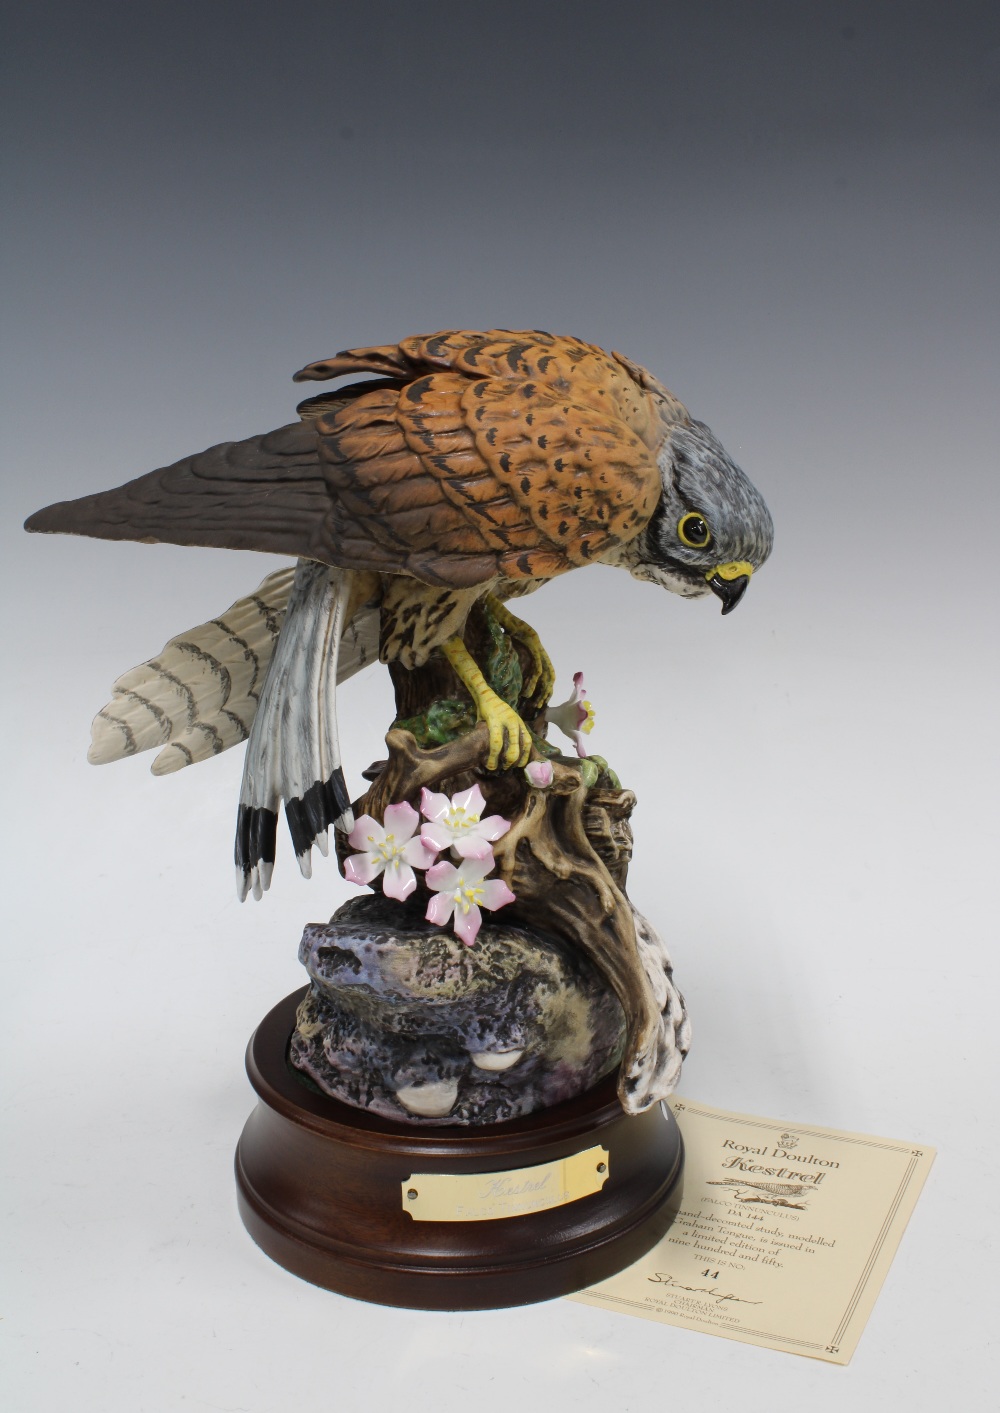 Royal Doulton Kestrel (Falco Tinnunculus), Ltd Ed 44 / 950, on wooden base, 29cm high including base